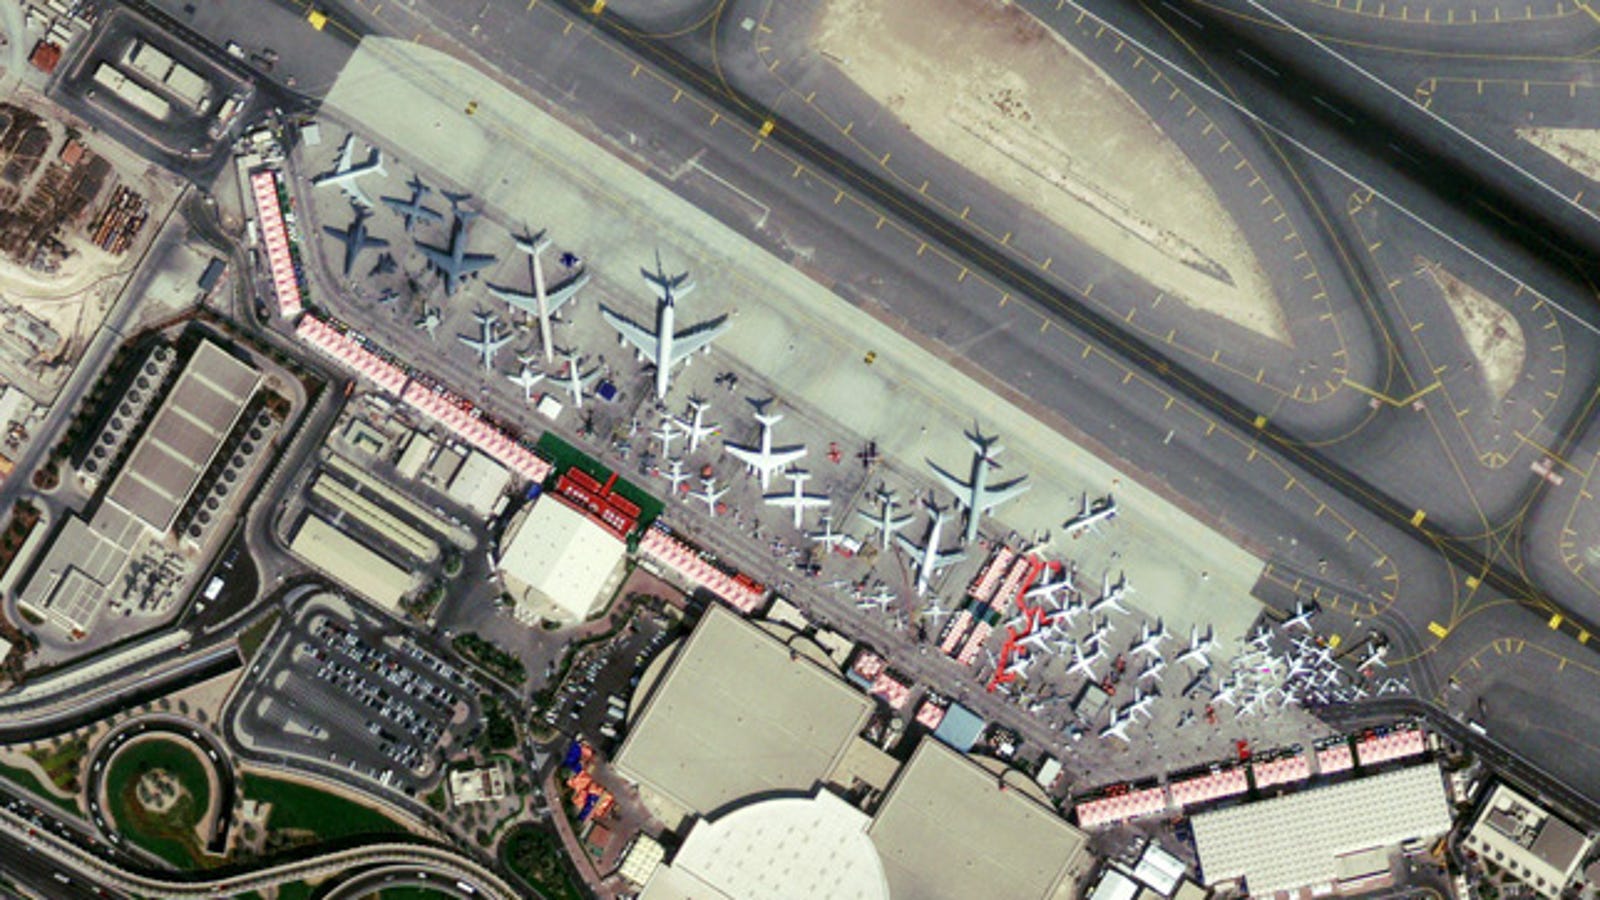 Вылет аэропорт аль мактум. Аль-Мактум аэропорт Дубай. Дубай 2 аэропорт. Международный аэропорт Дубая (аэропорт Аль-Мактум). Терминал 1 Dubai.